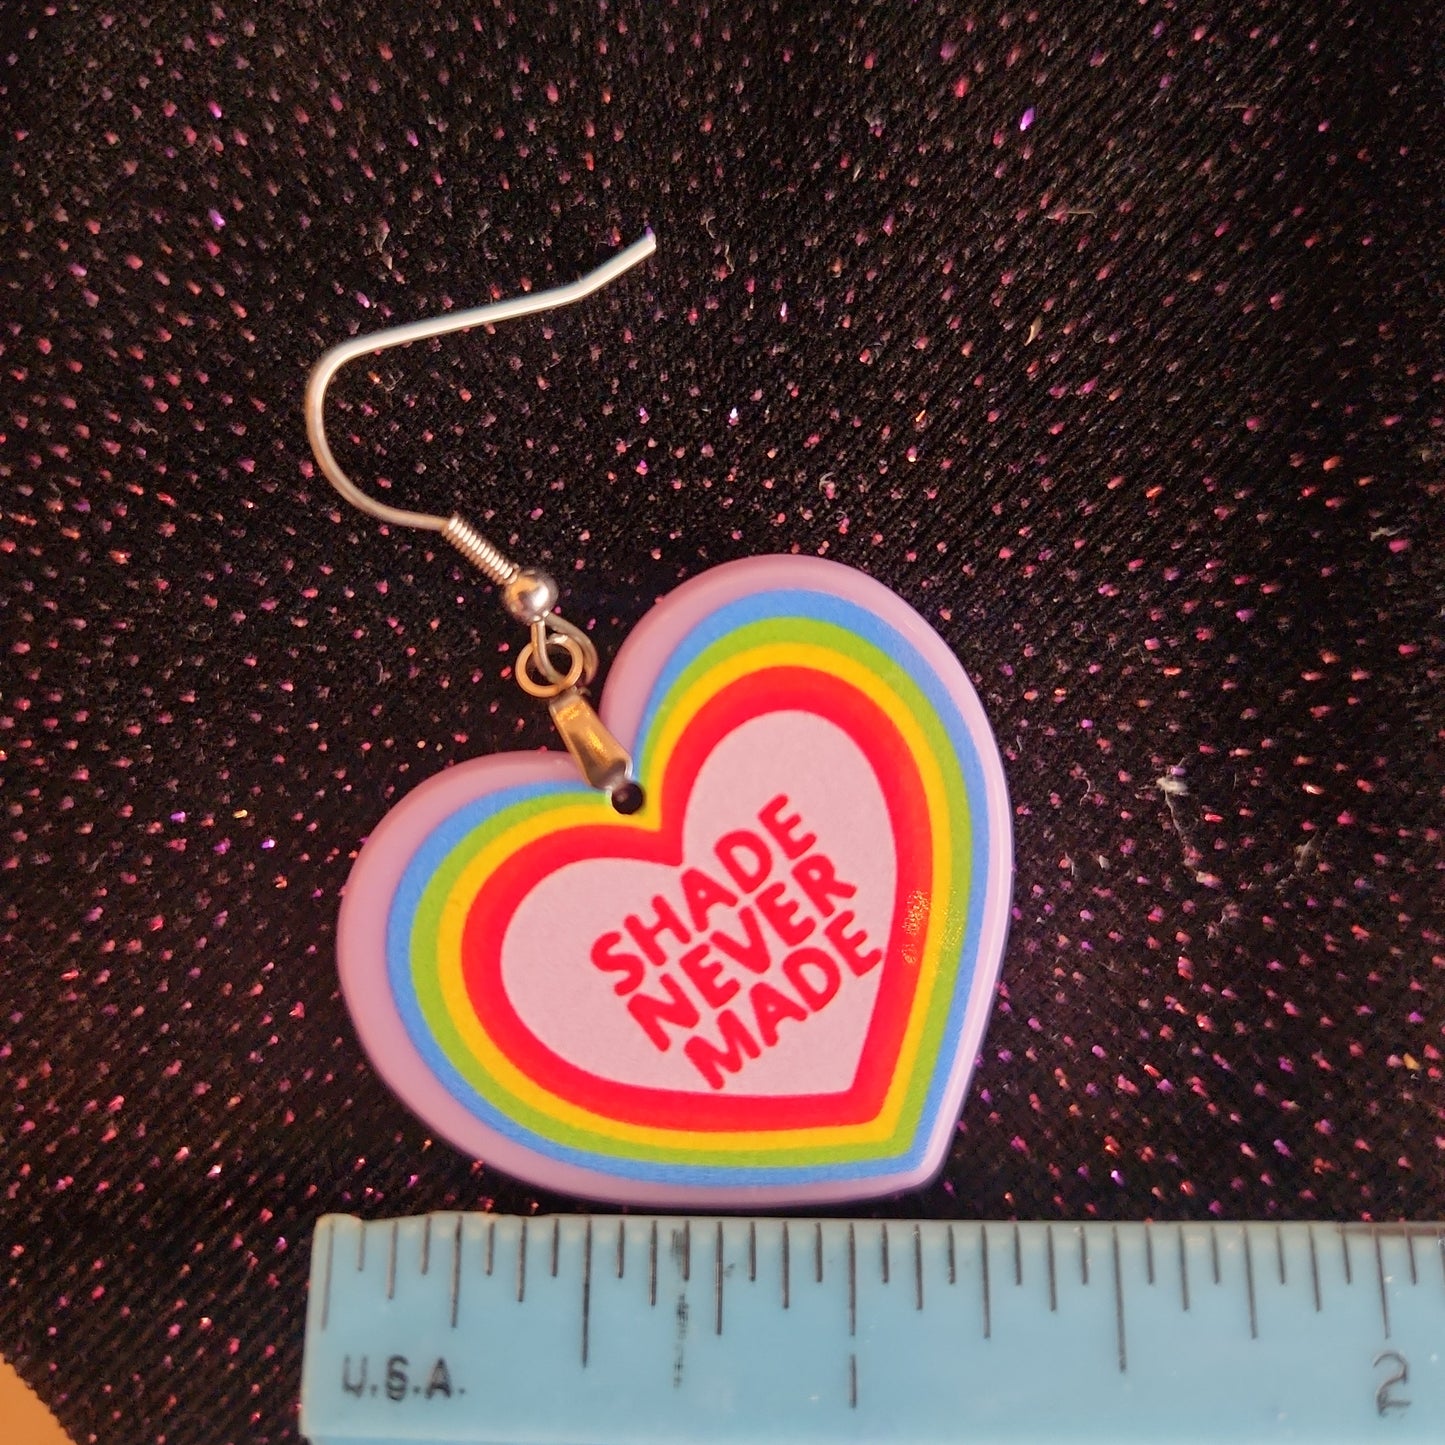 Shade Never Made Anybody Less Gay Pride Heart Earrings